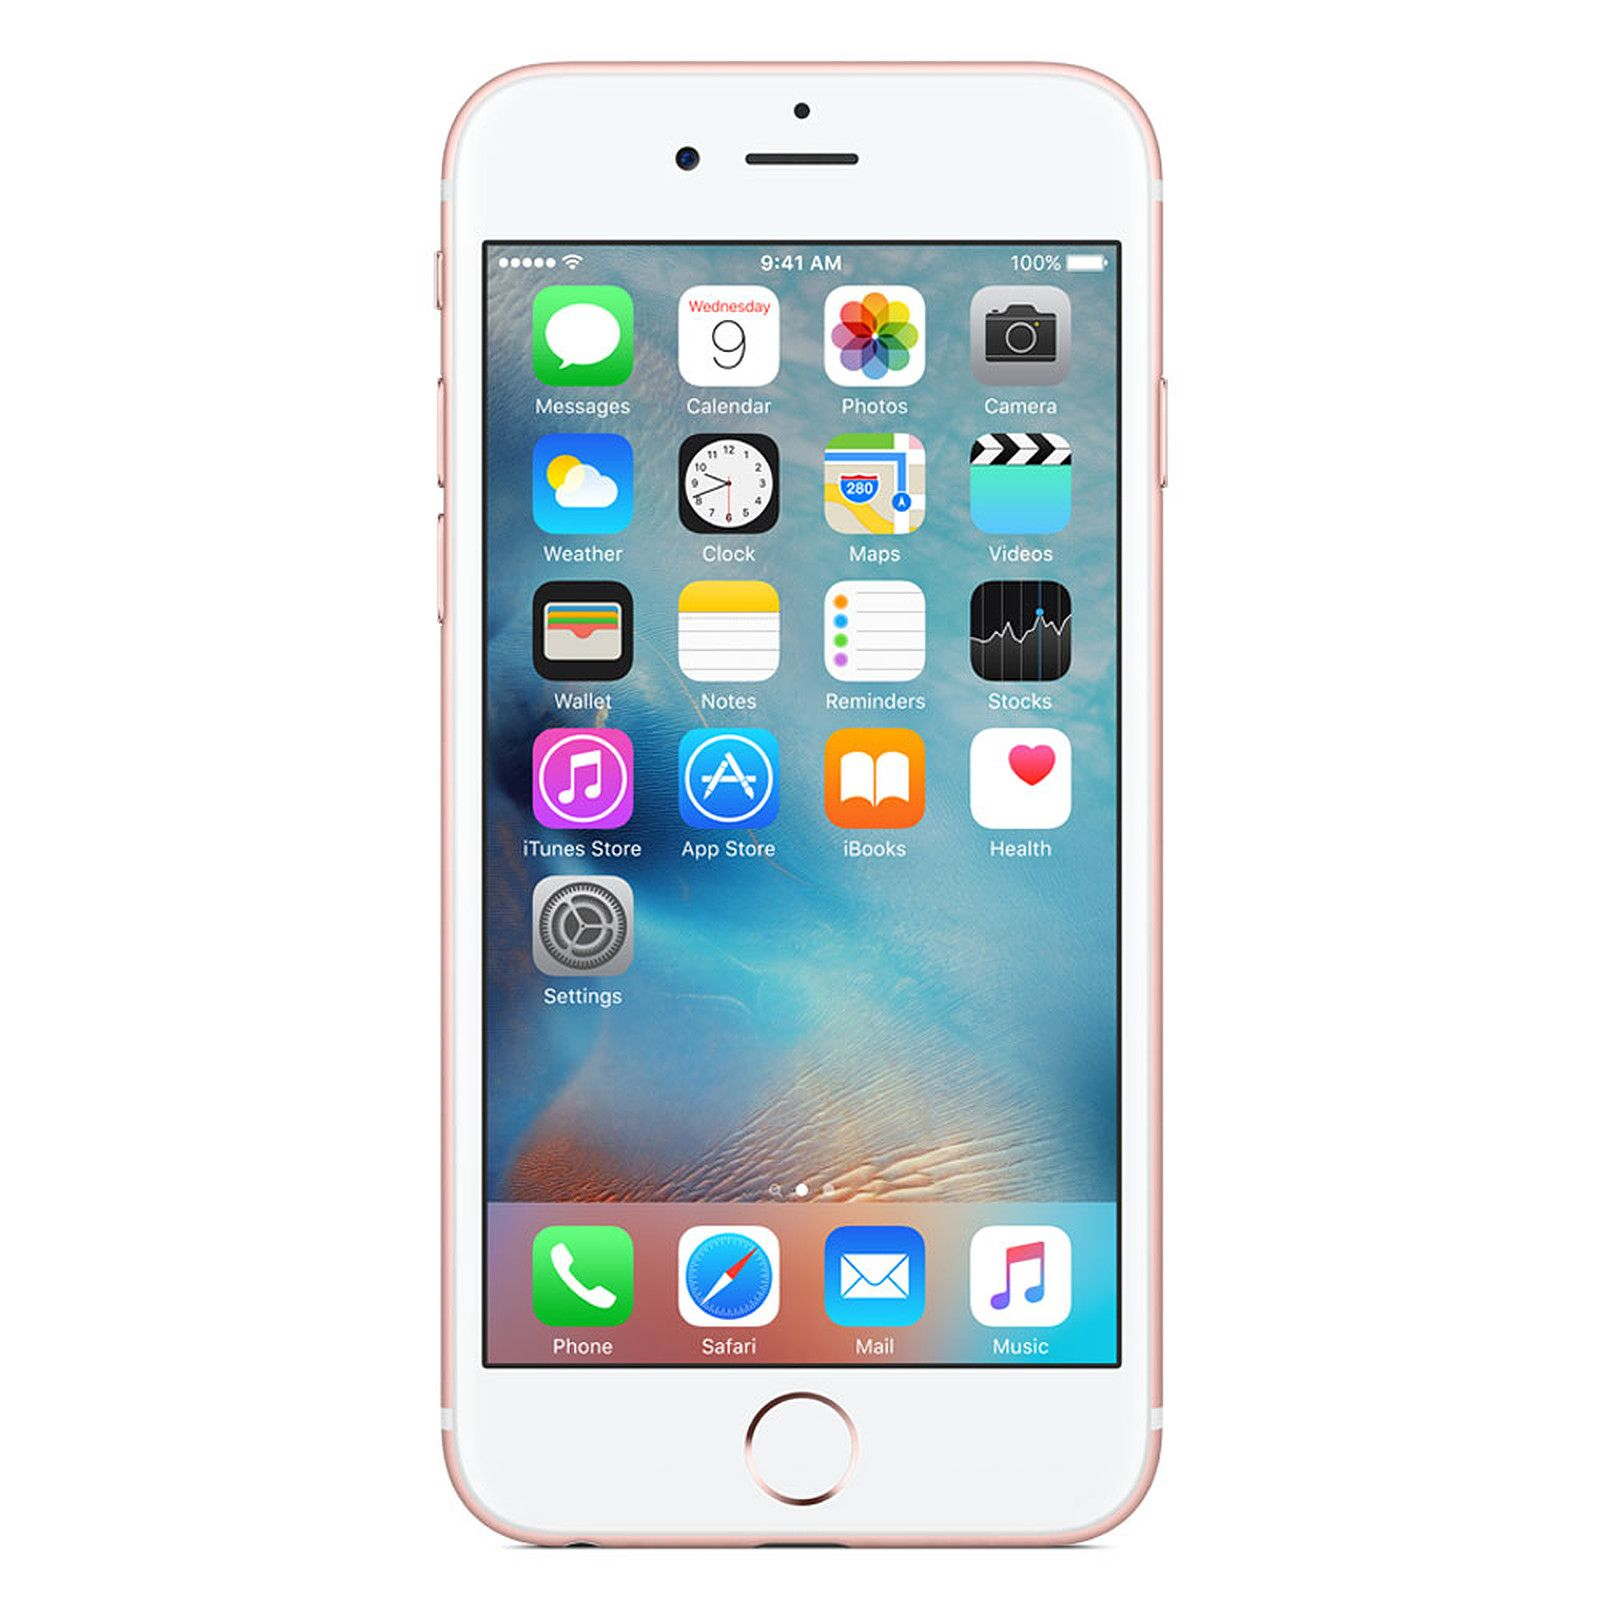 GB 16 (*) APPLE GB Plus REFURBISHED iPhone Rosa 16 6S